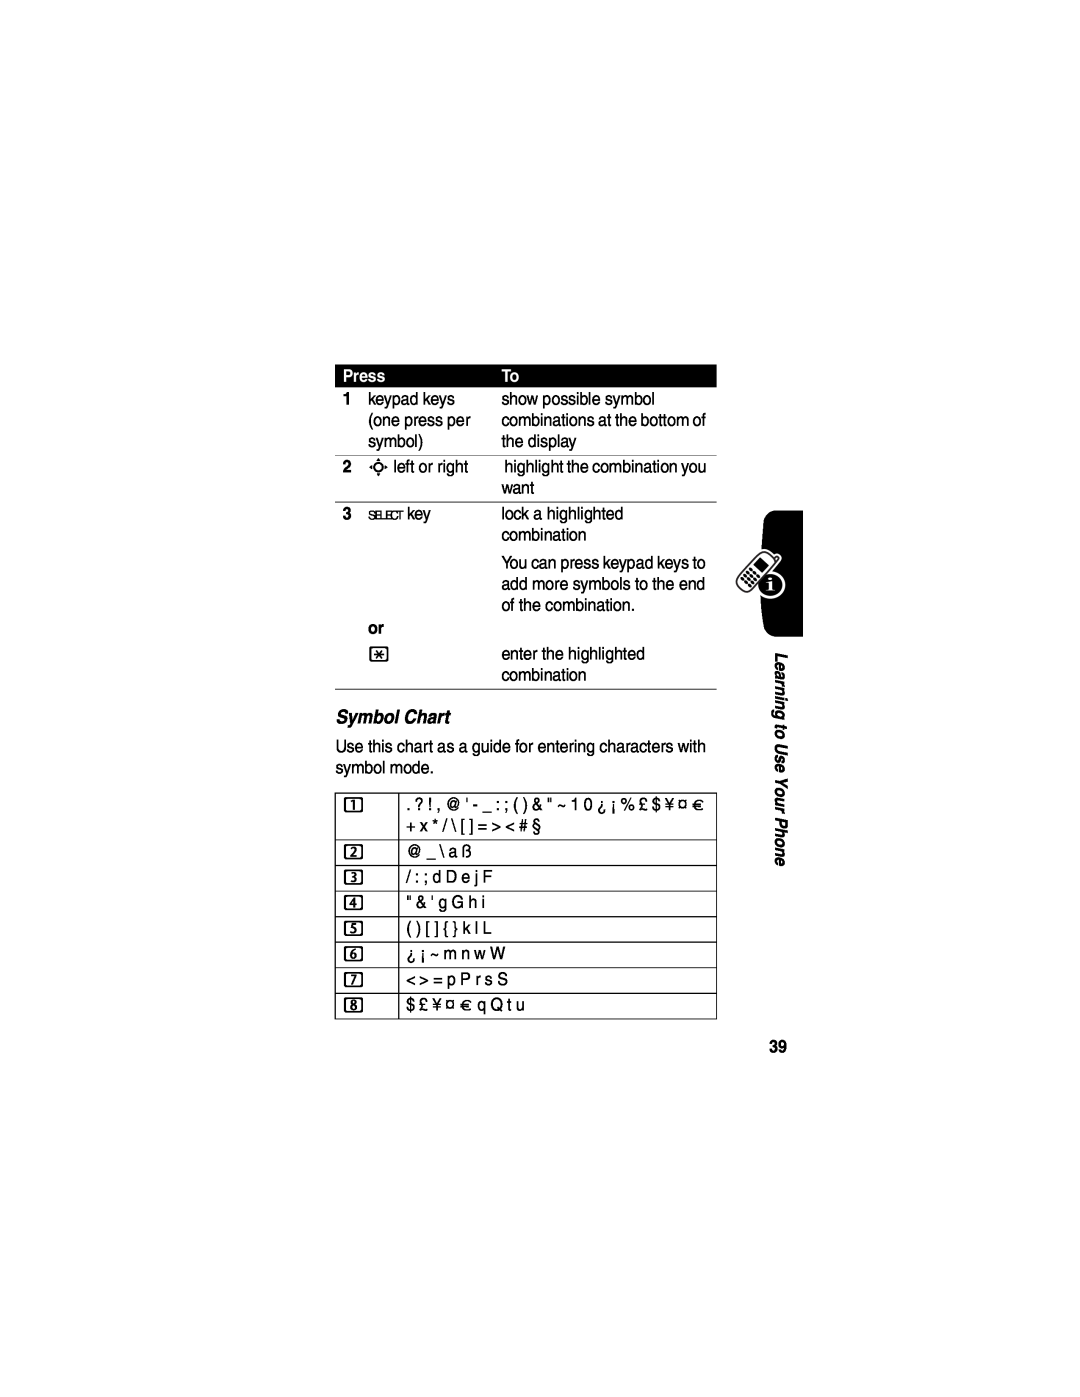 Motorola V555 manual Symbol Chart, Press 